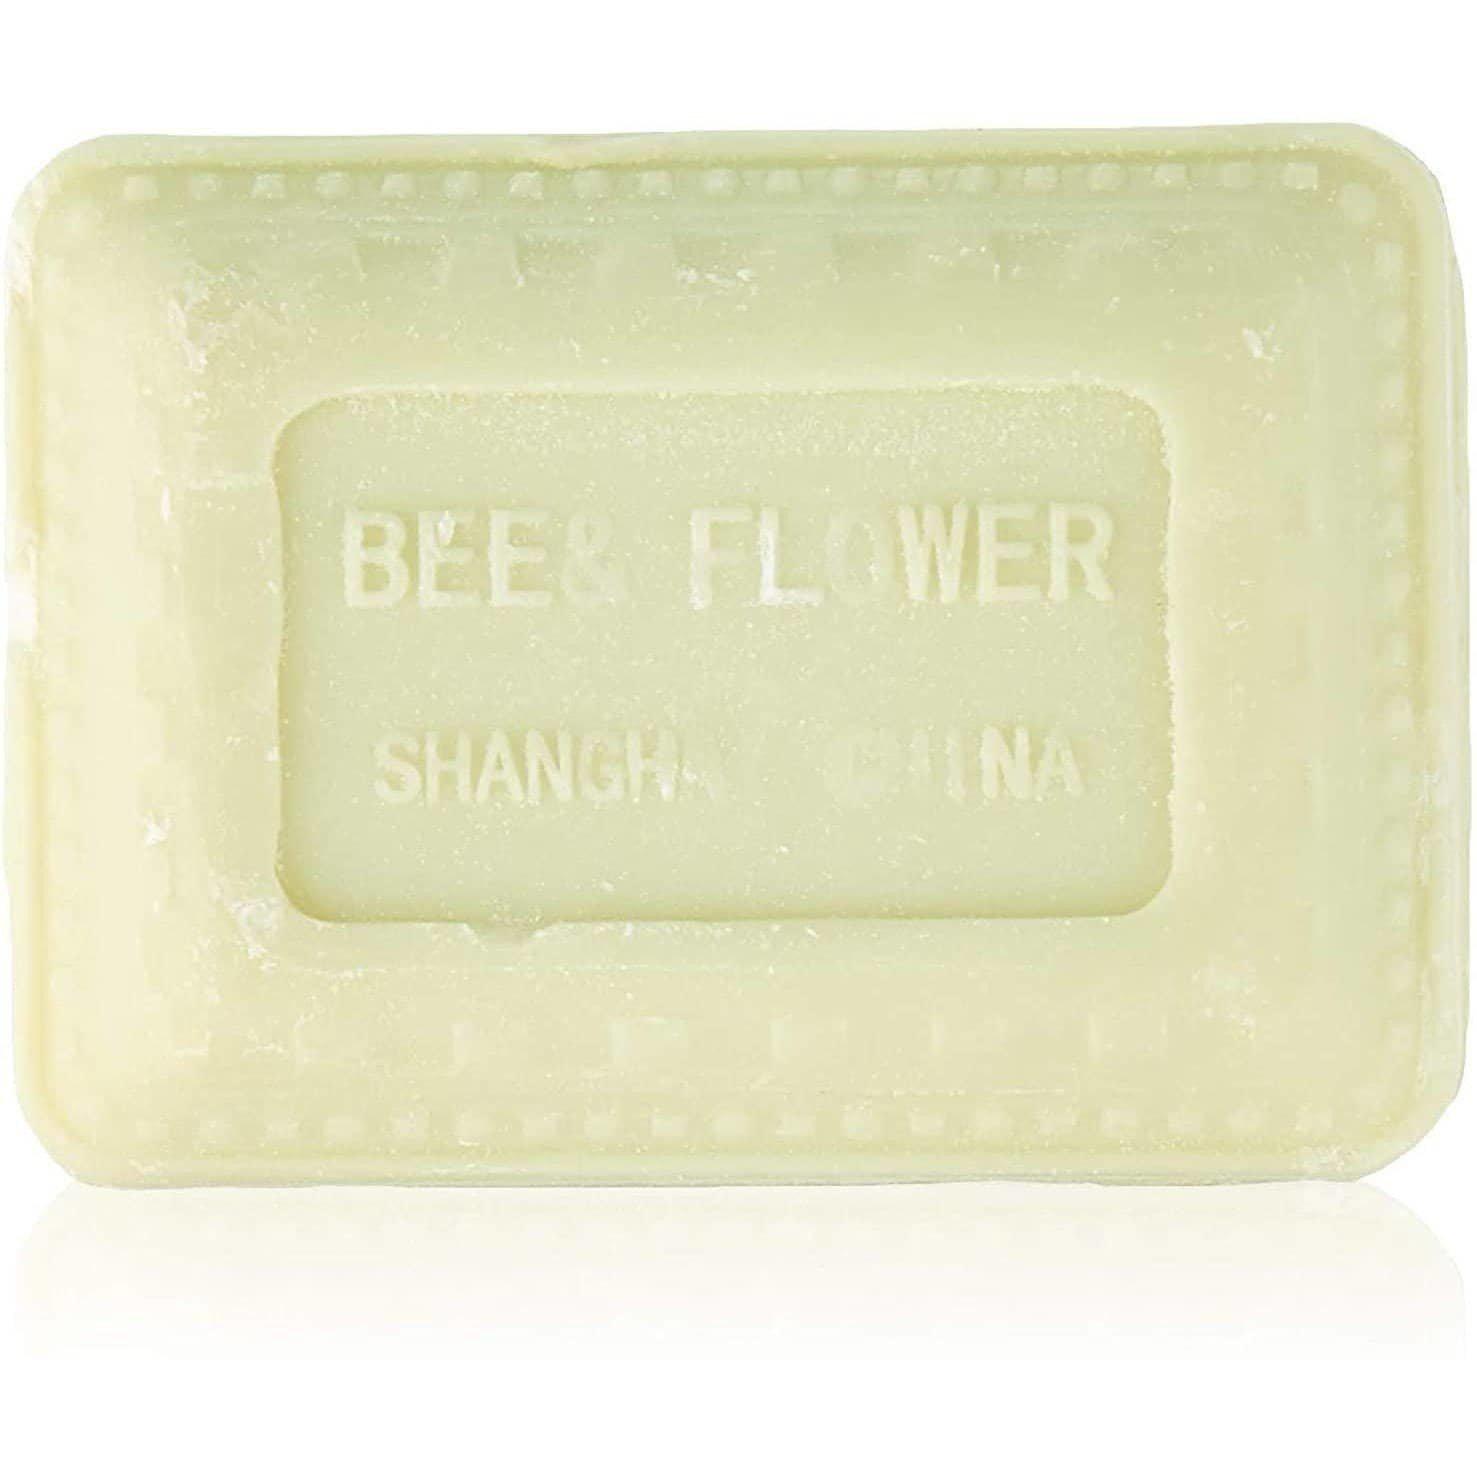 Bee Flower Brand, Jasmine Soap, 81G